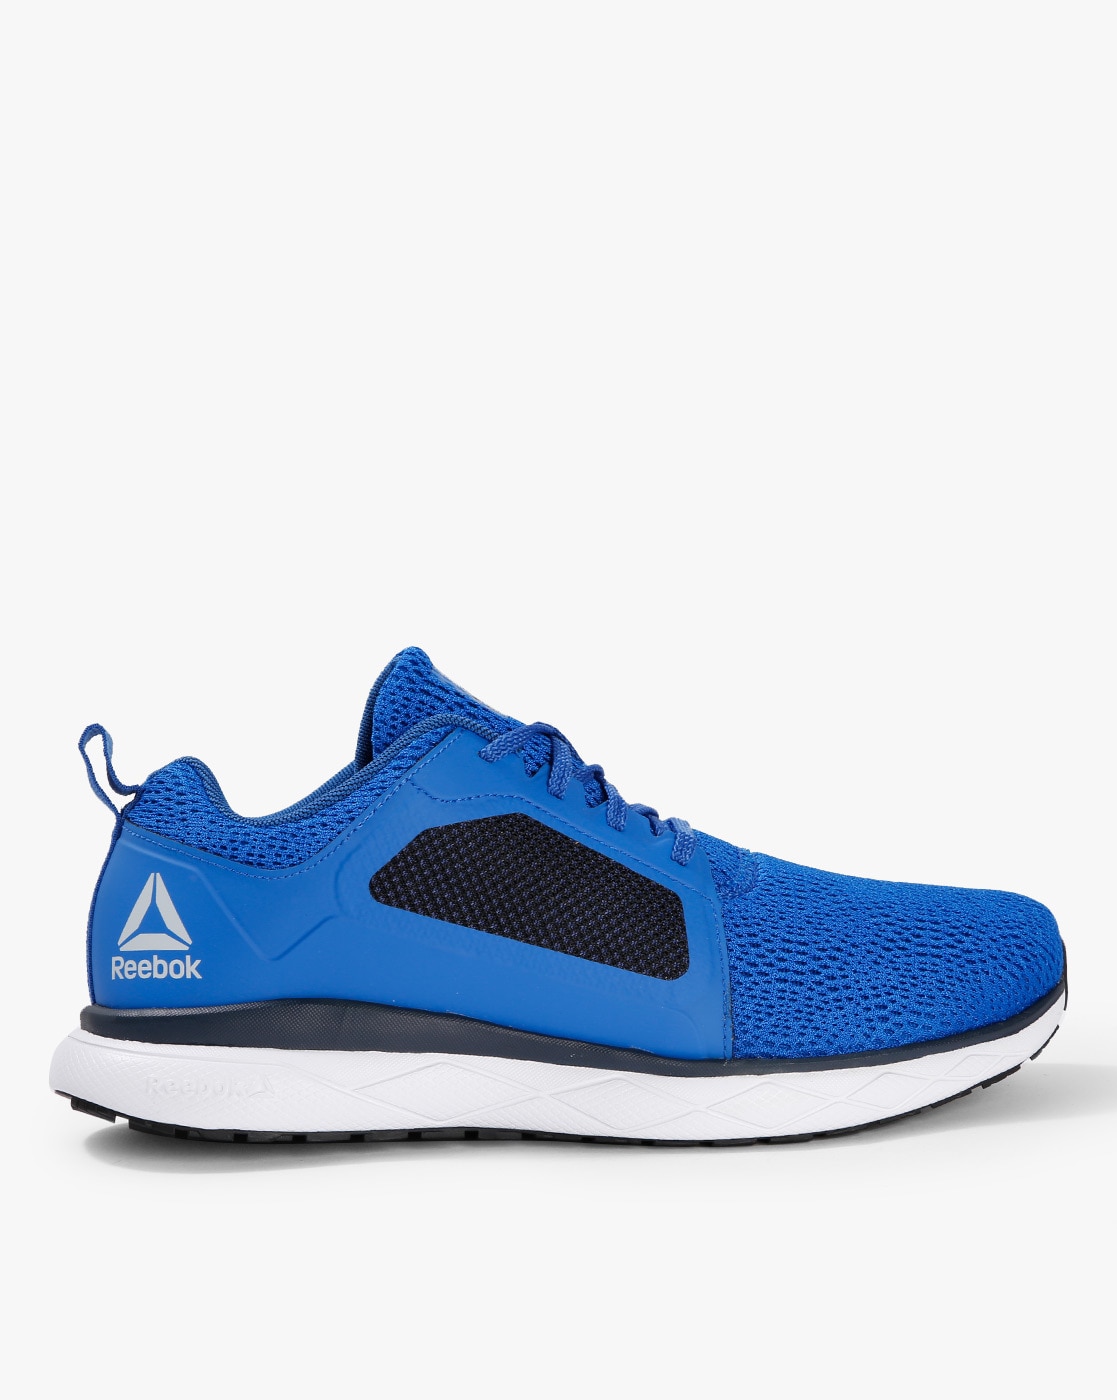 blue reebok shoes